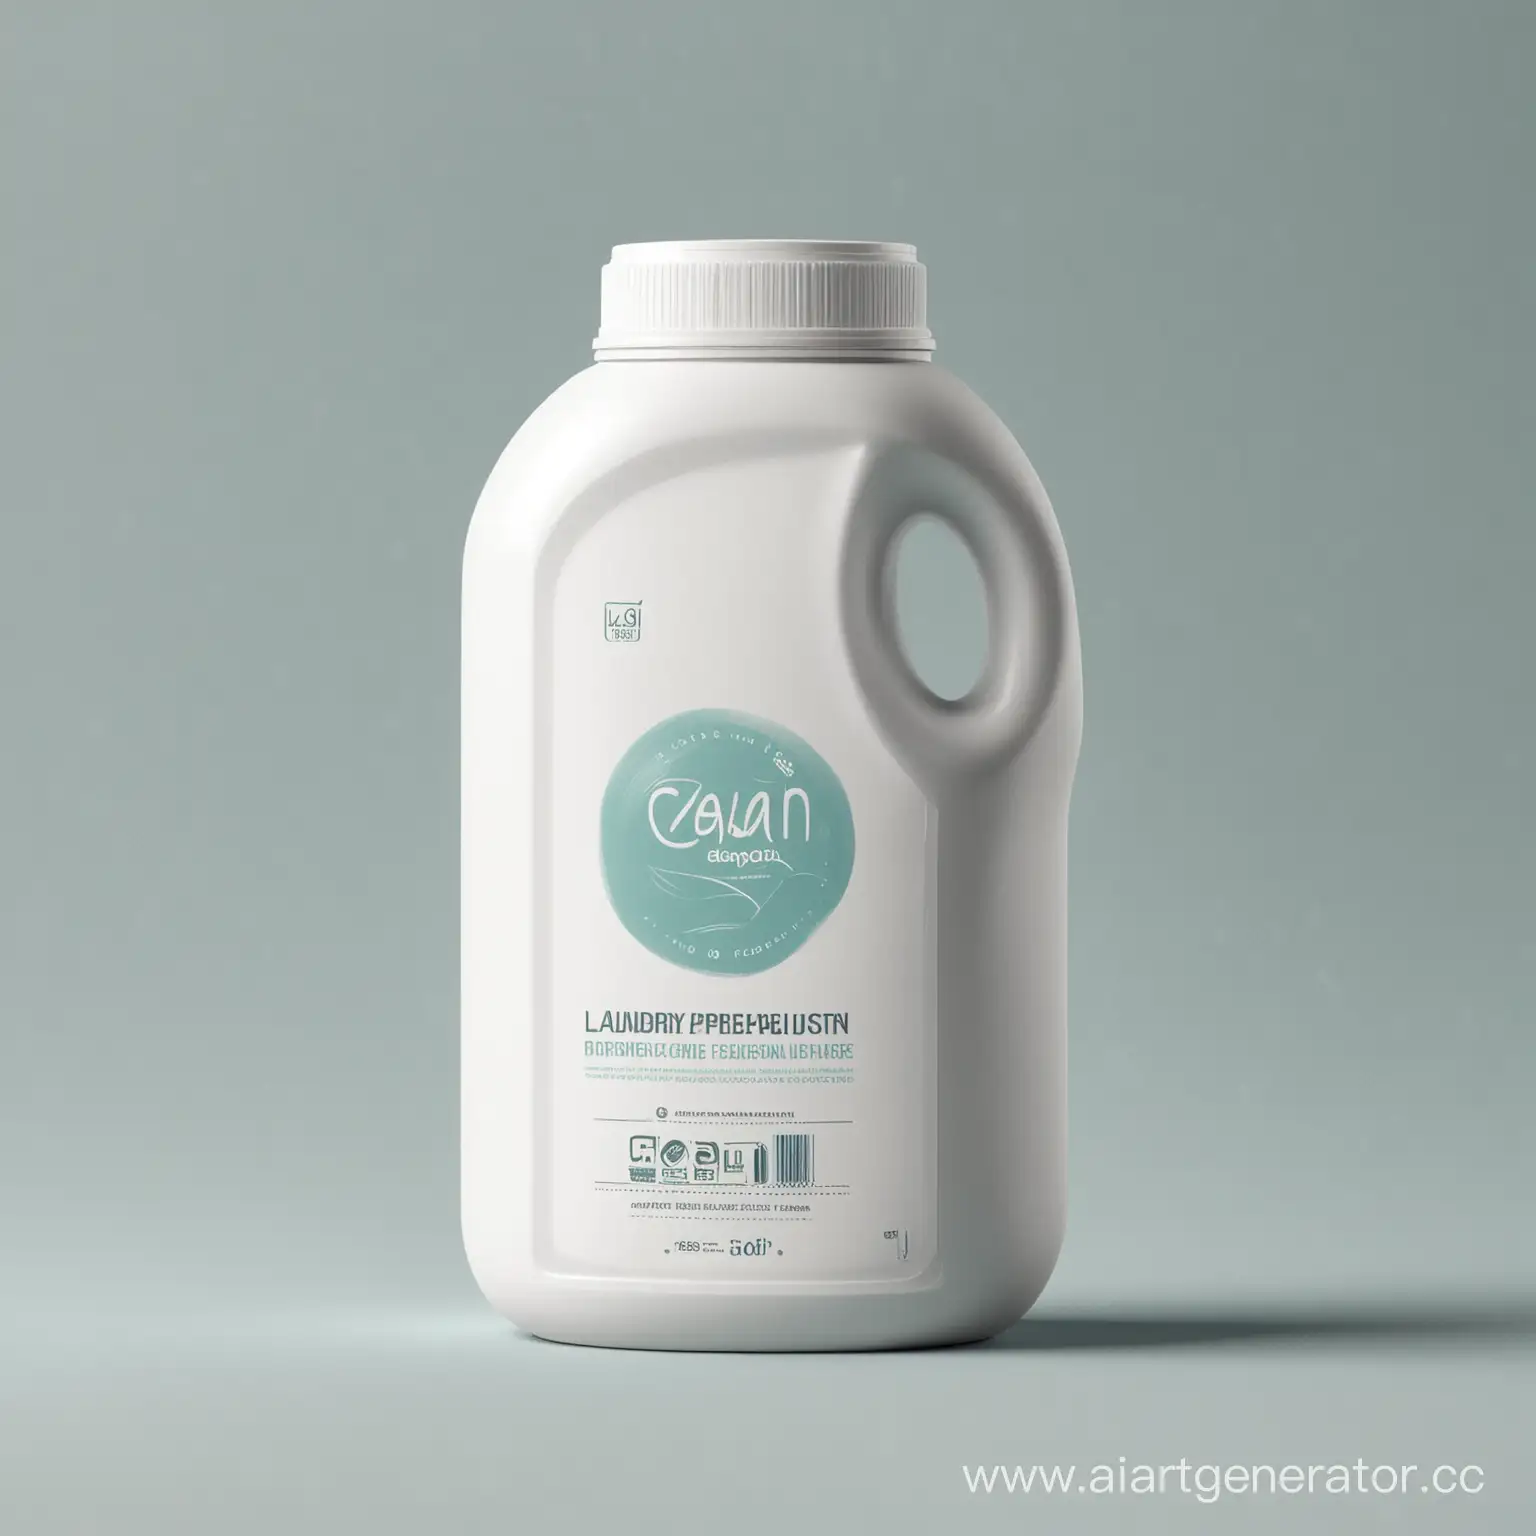 Minimalist-Style-Packaging-Design-Cleanzen-Laundry-Detergent-in-Zip-Package